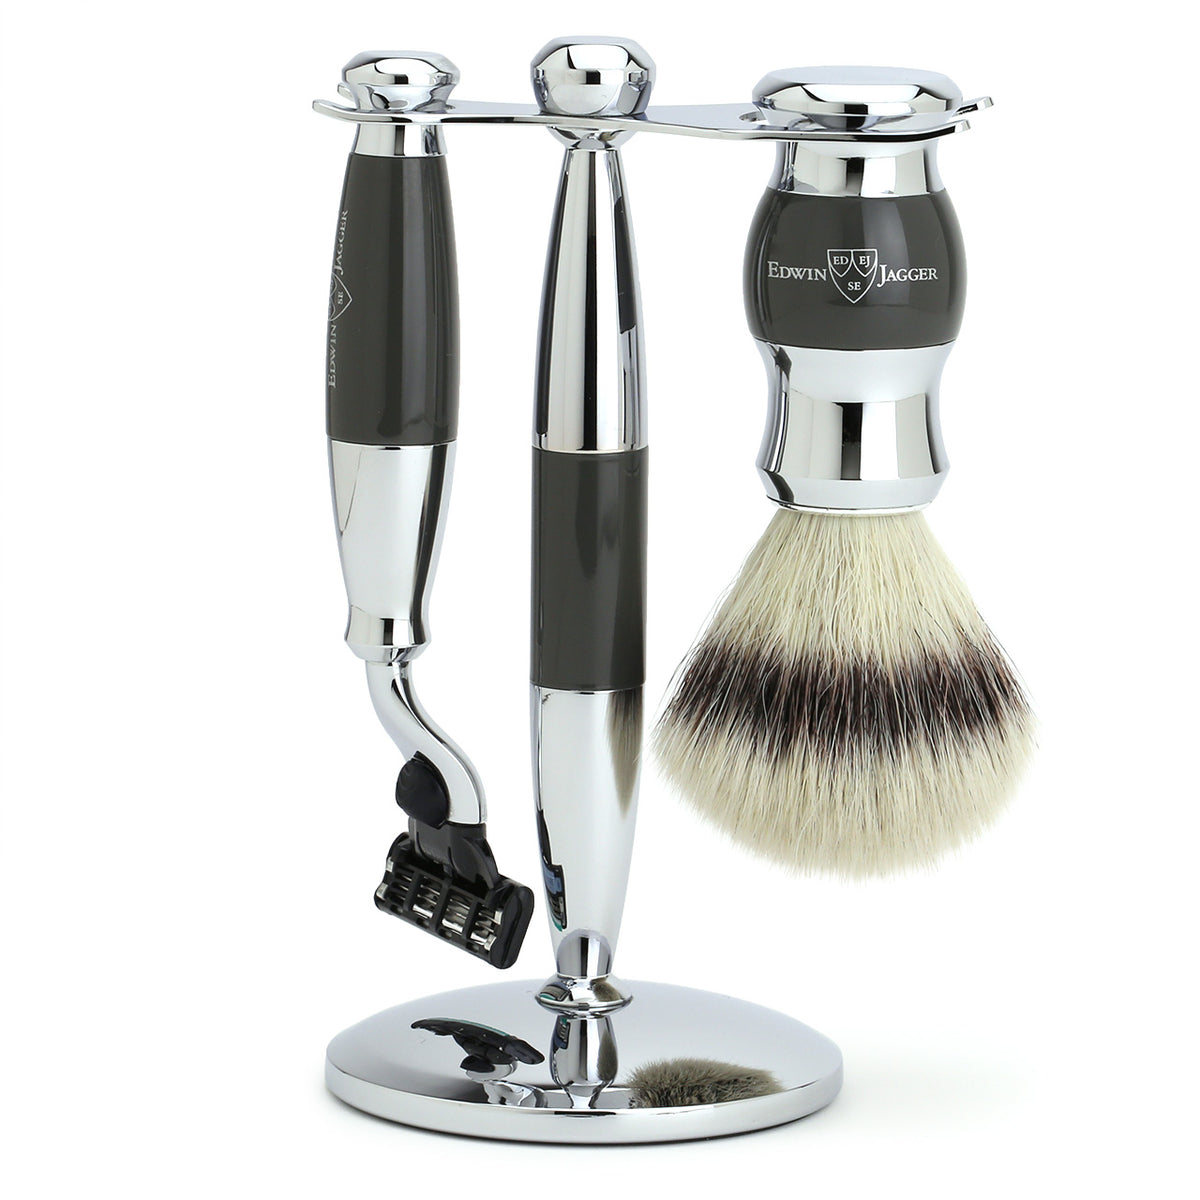 Edwin Jagger Shaving Set with Mach3 Razor, Shaving Brush &amp; Stand - Grey